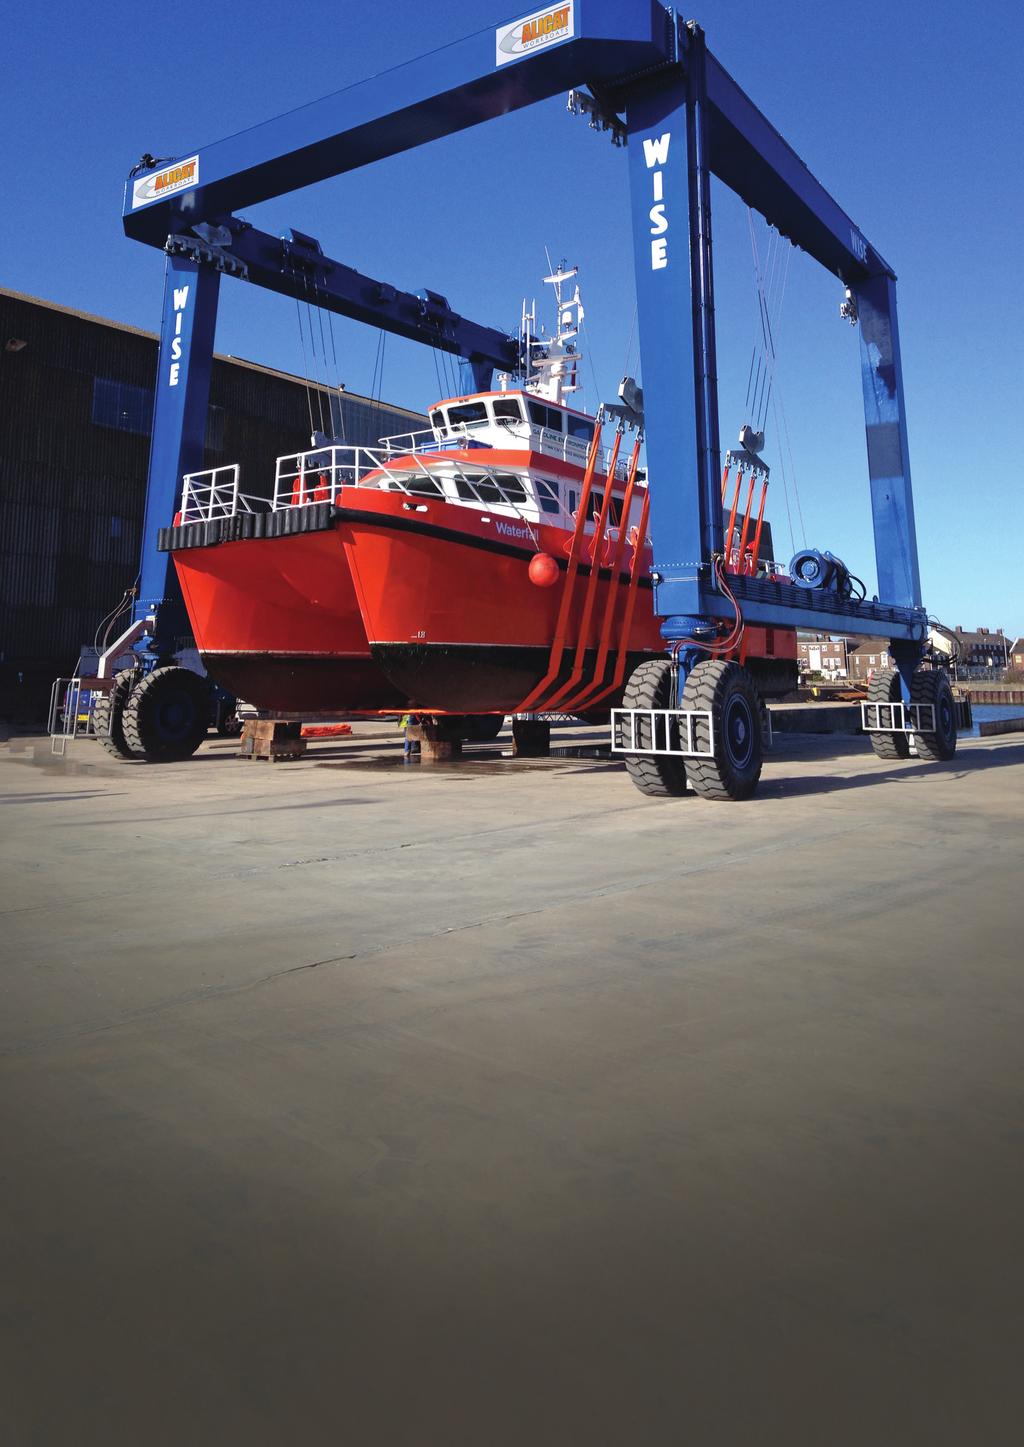 Boat Sales & Repairs 200T Vessel Lift Marine Electricals Fabrication Precision Engineering Marine Design Hydraulic Services Diesel Engineering & Testing 25m